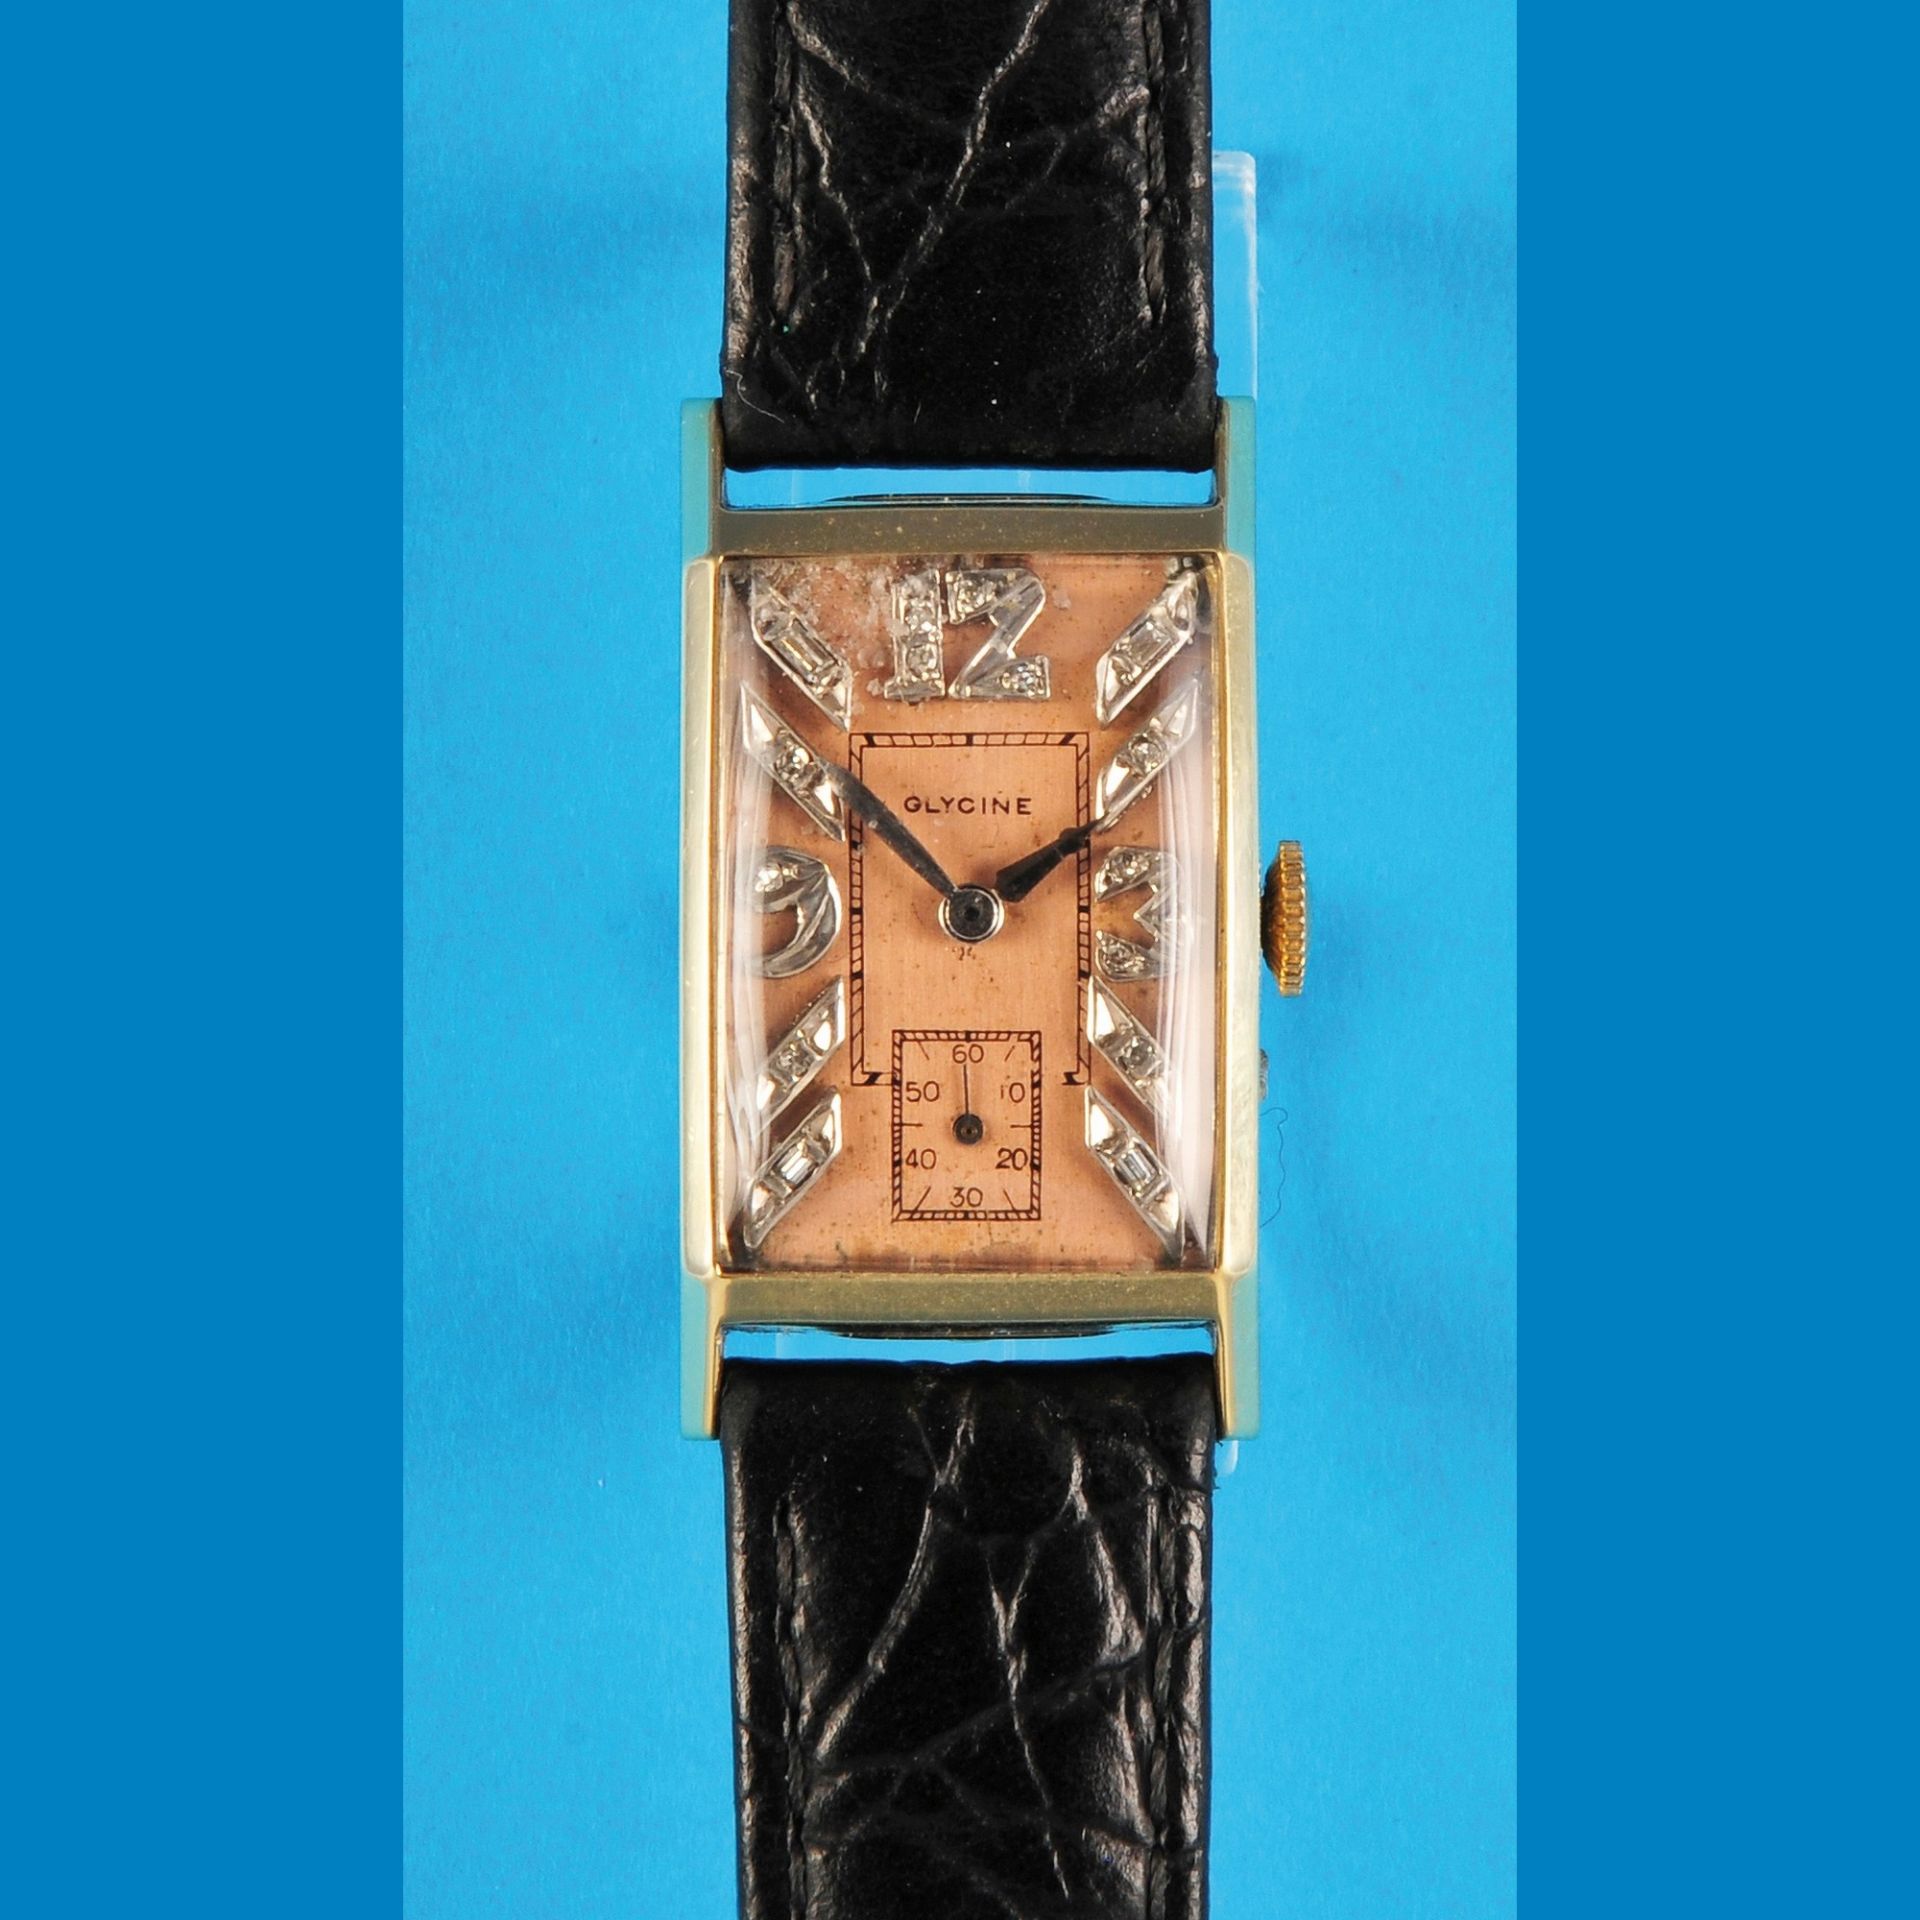 Glycine Watch Co., model 96, rectangular golden wristwatch